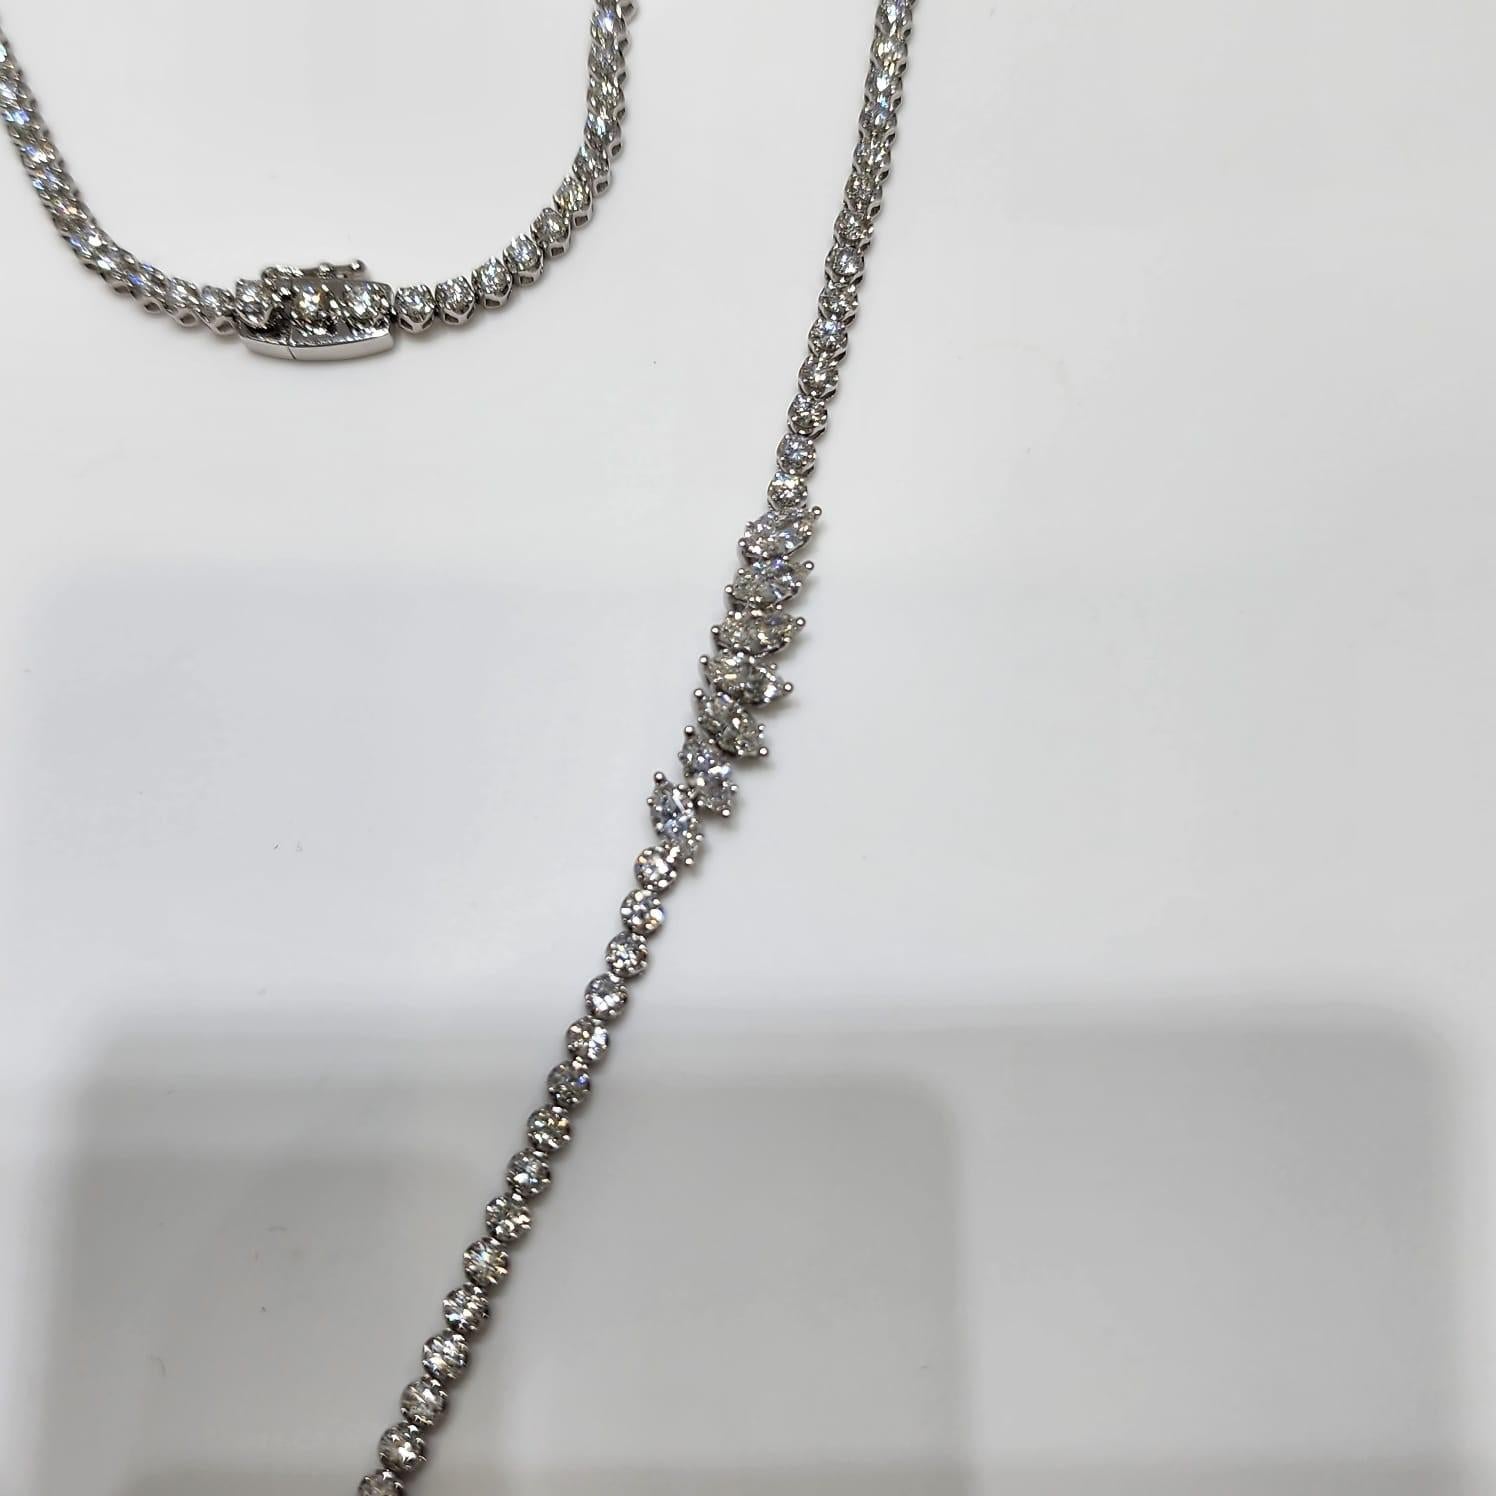 8.61 Carat Burma Ruby Diamond Necklace in 18 Karat White Gold For Sale 1